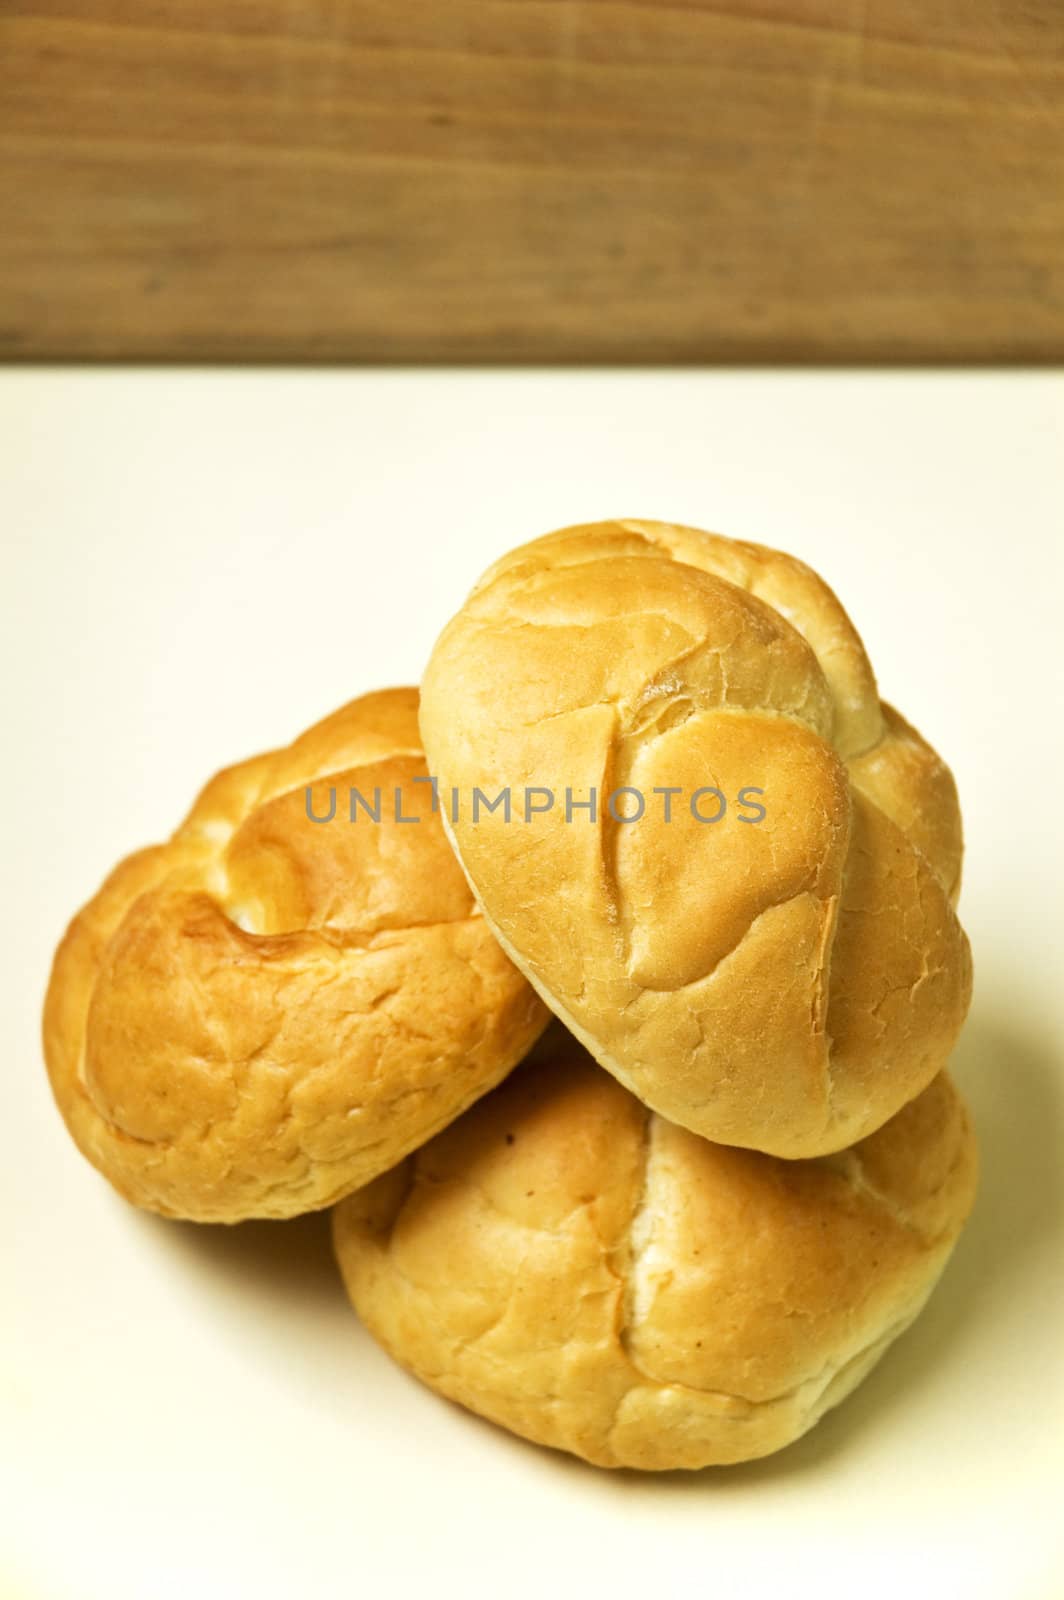 Three bread roll on kitchen table.